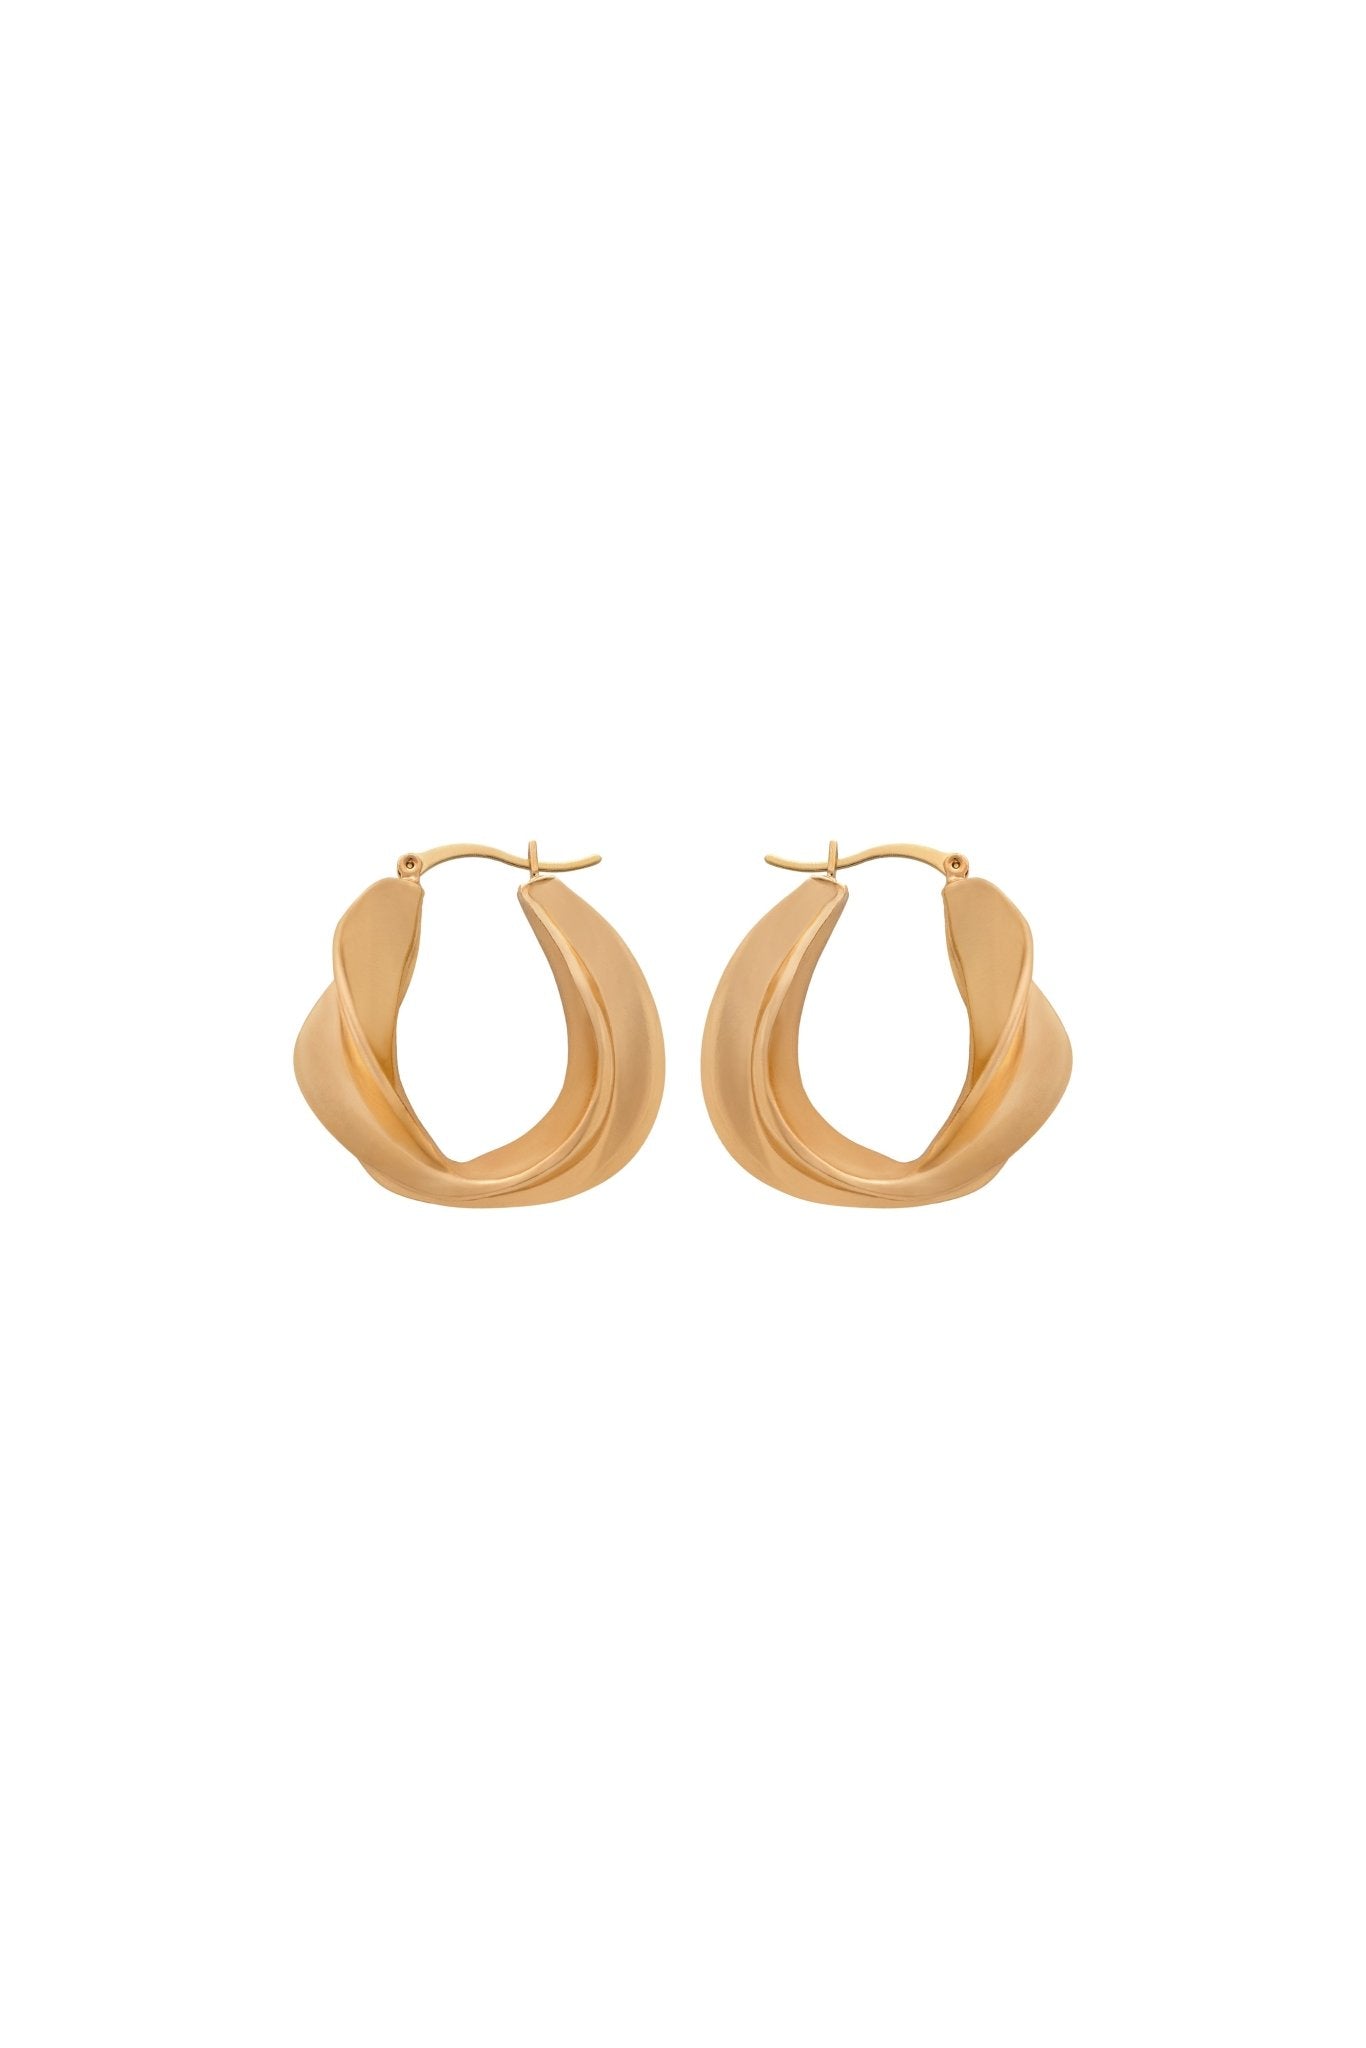 Malta Hoop Earrings- Gold - YG COLLECTION